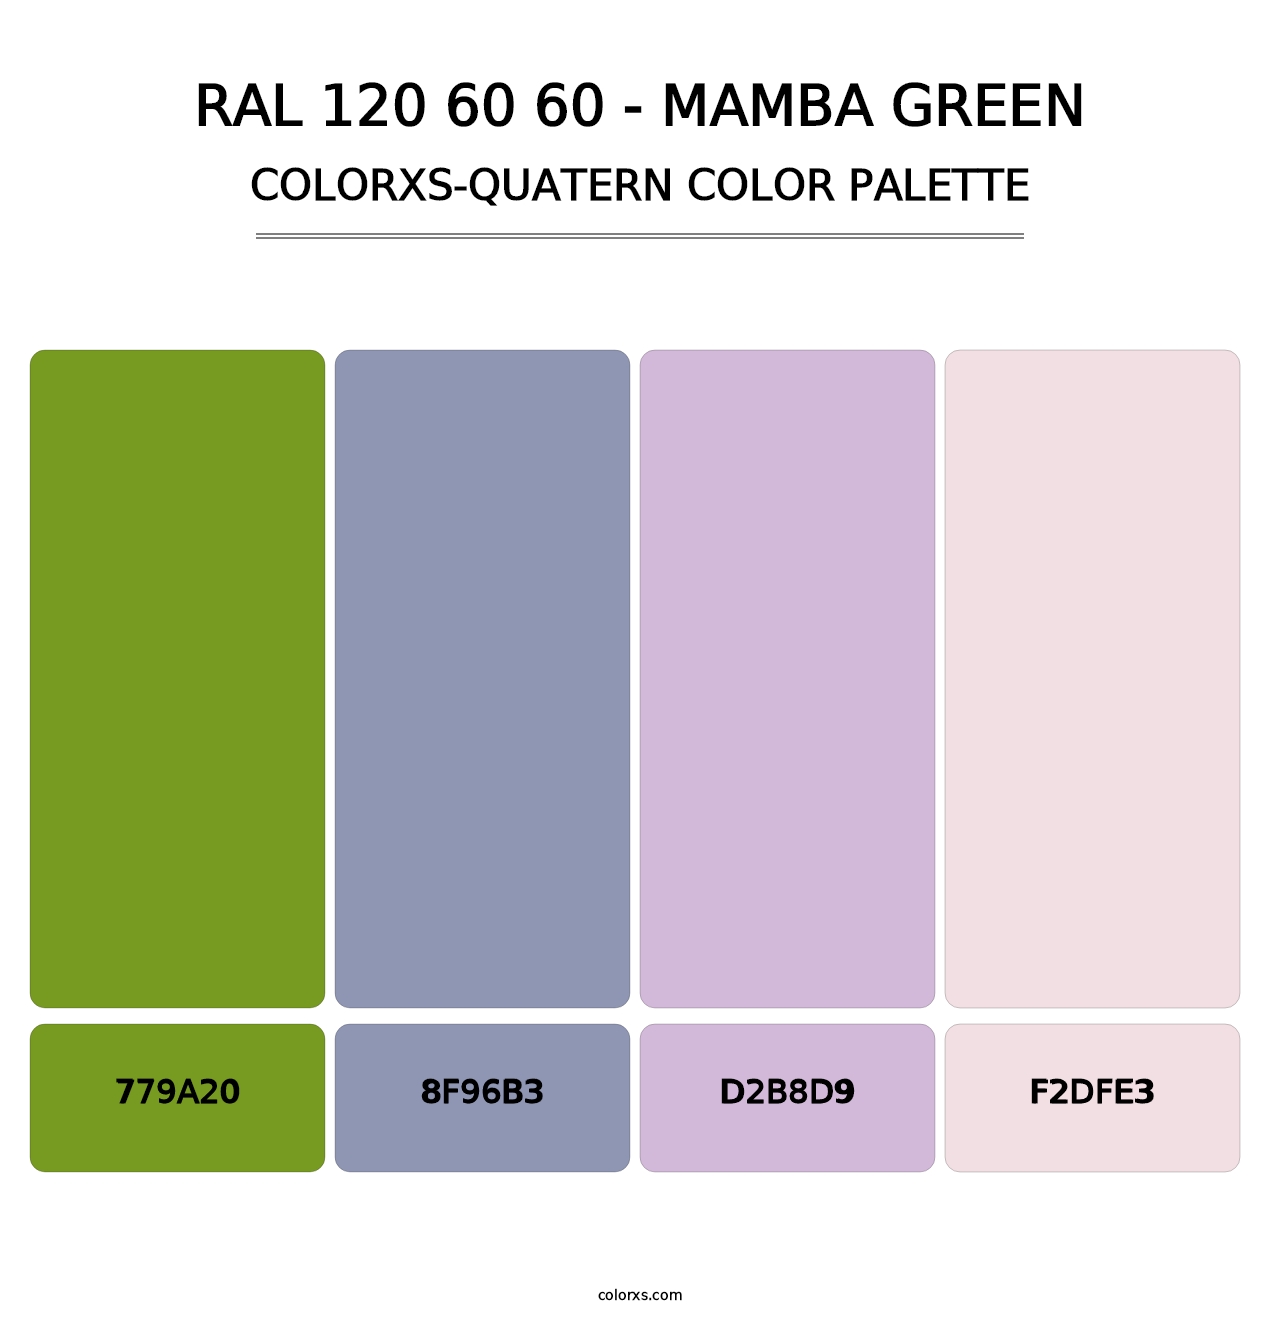 RAL 120 60 60 - Mamba Green - Colorxs Quatern Palette